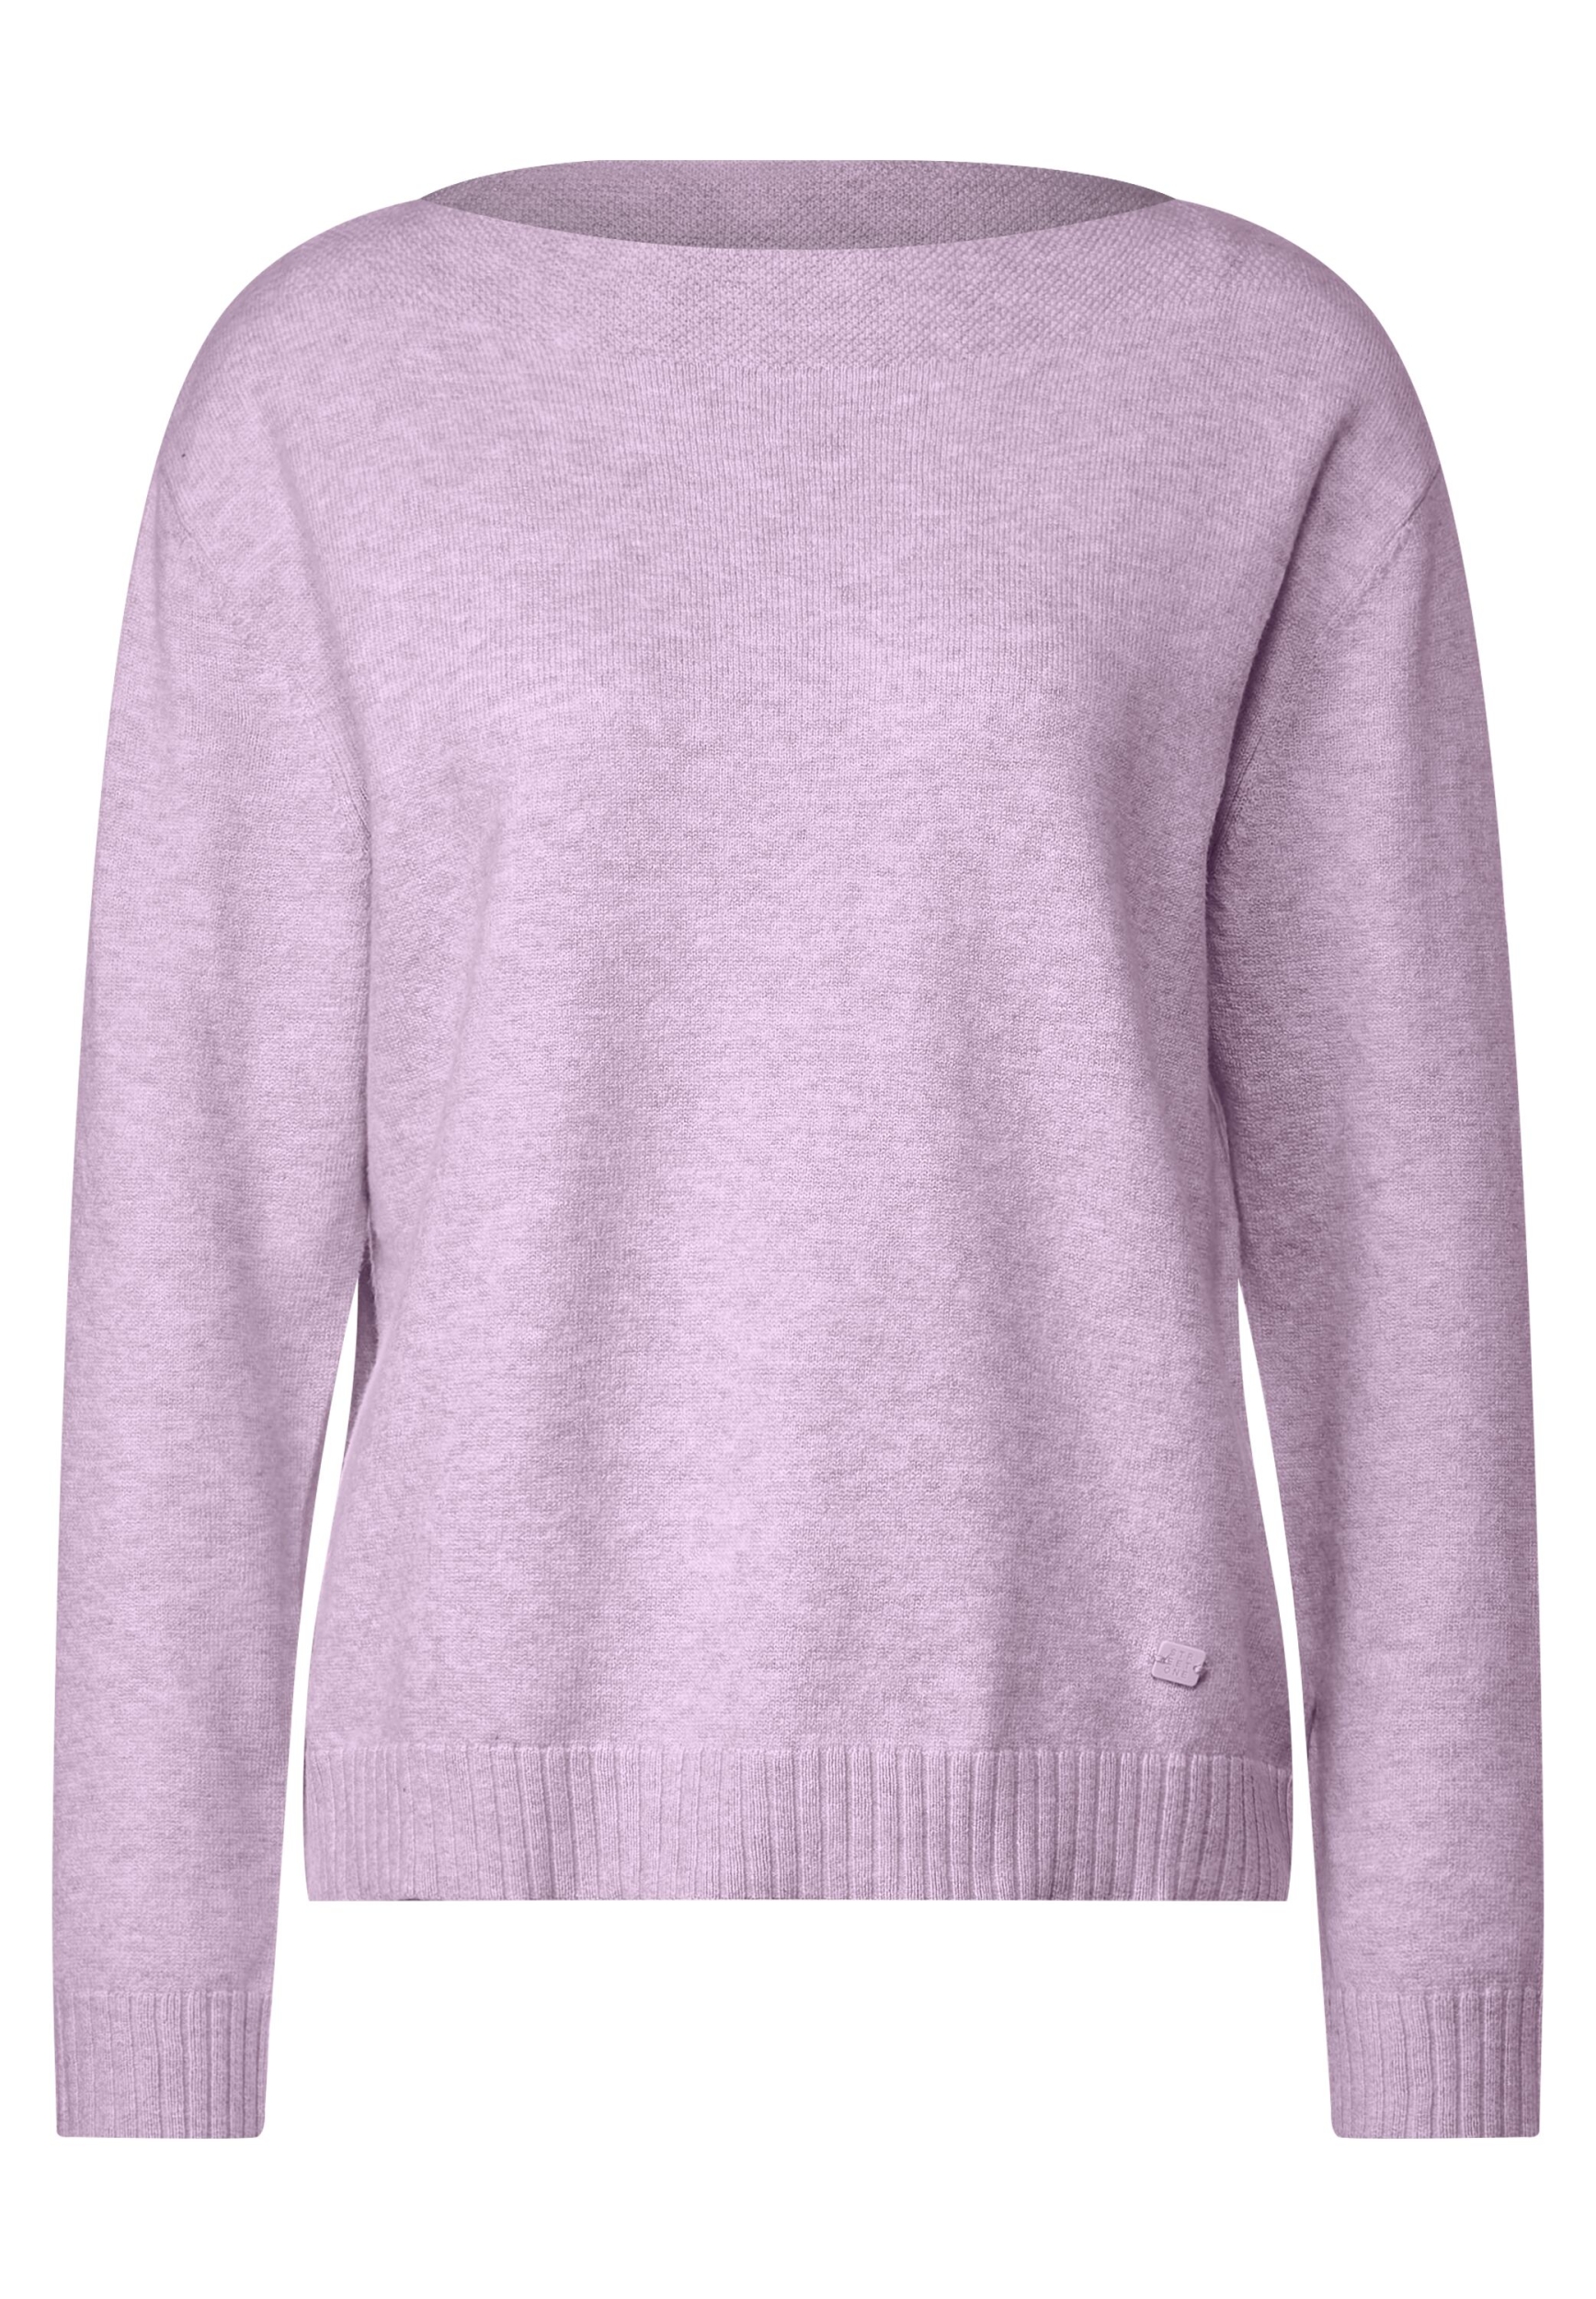 Bestpreis LTD QR | A302414-15290-40 pure melange u-boat lilac 40 sweater | soft 